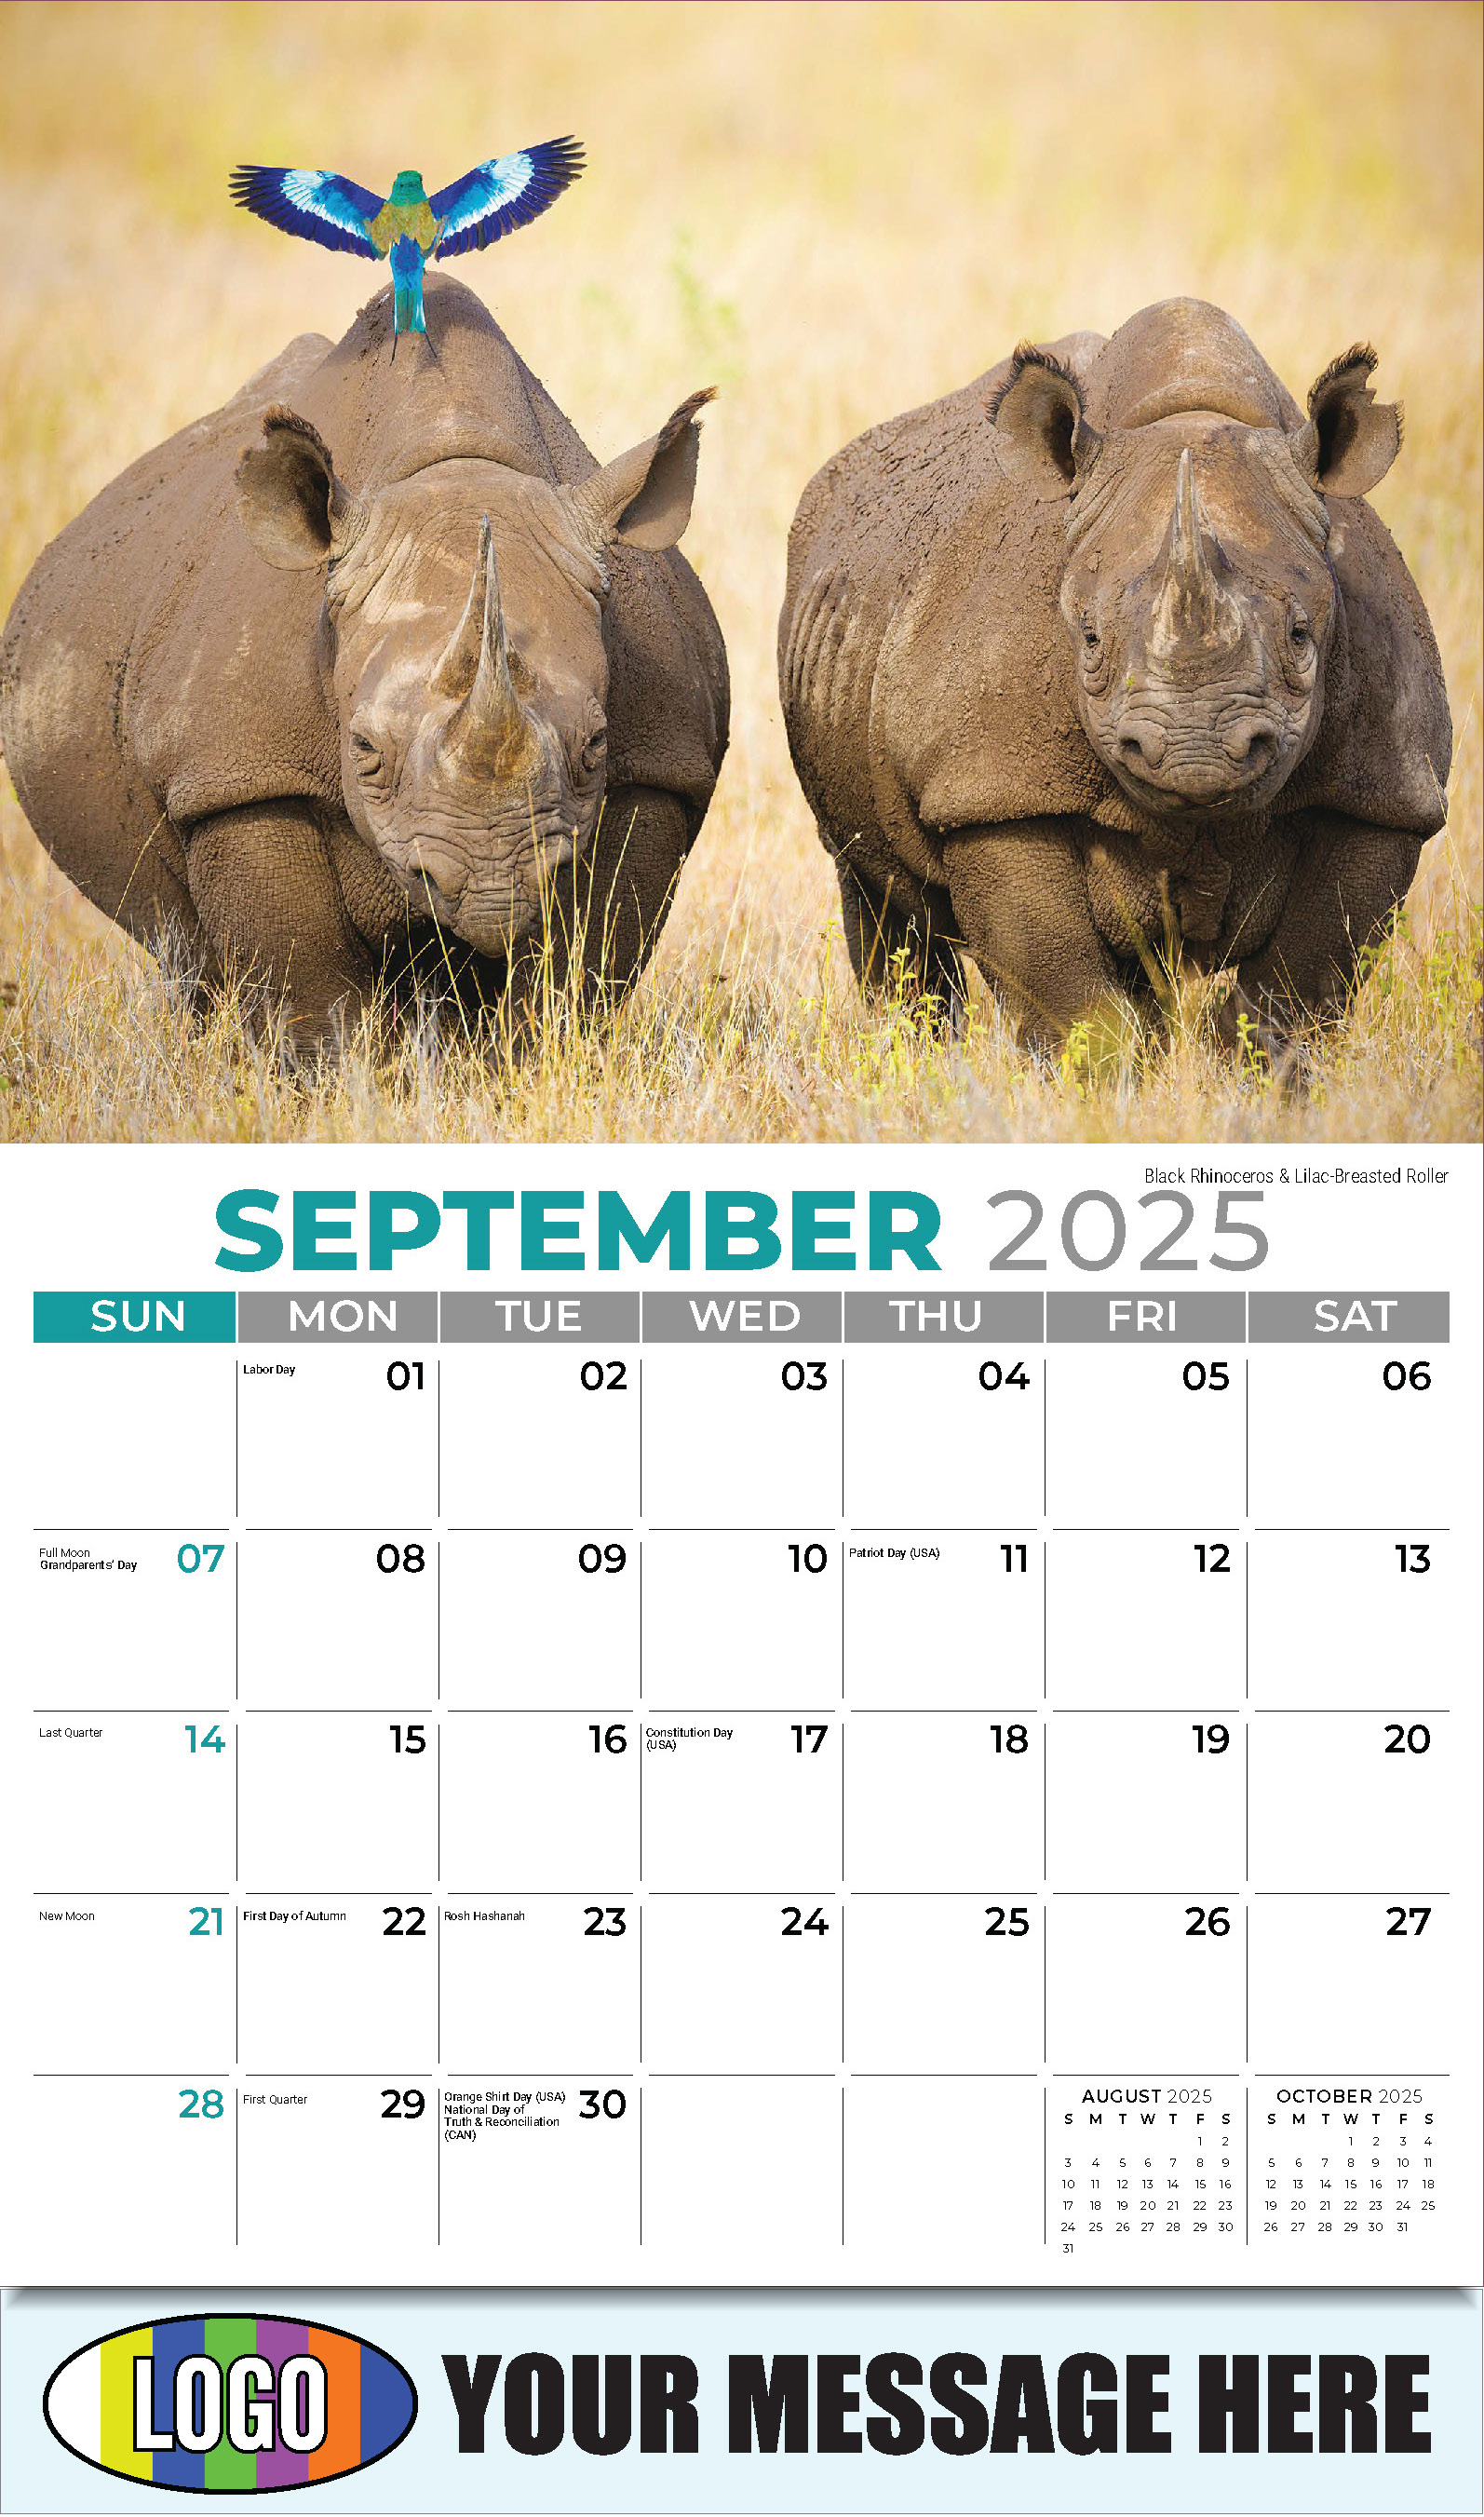 International Wildlife 2025 Business Advertising Wall Calendar - September